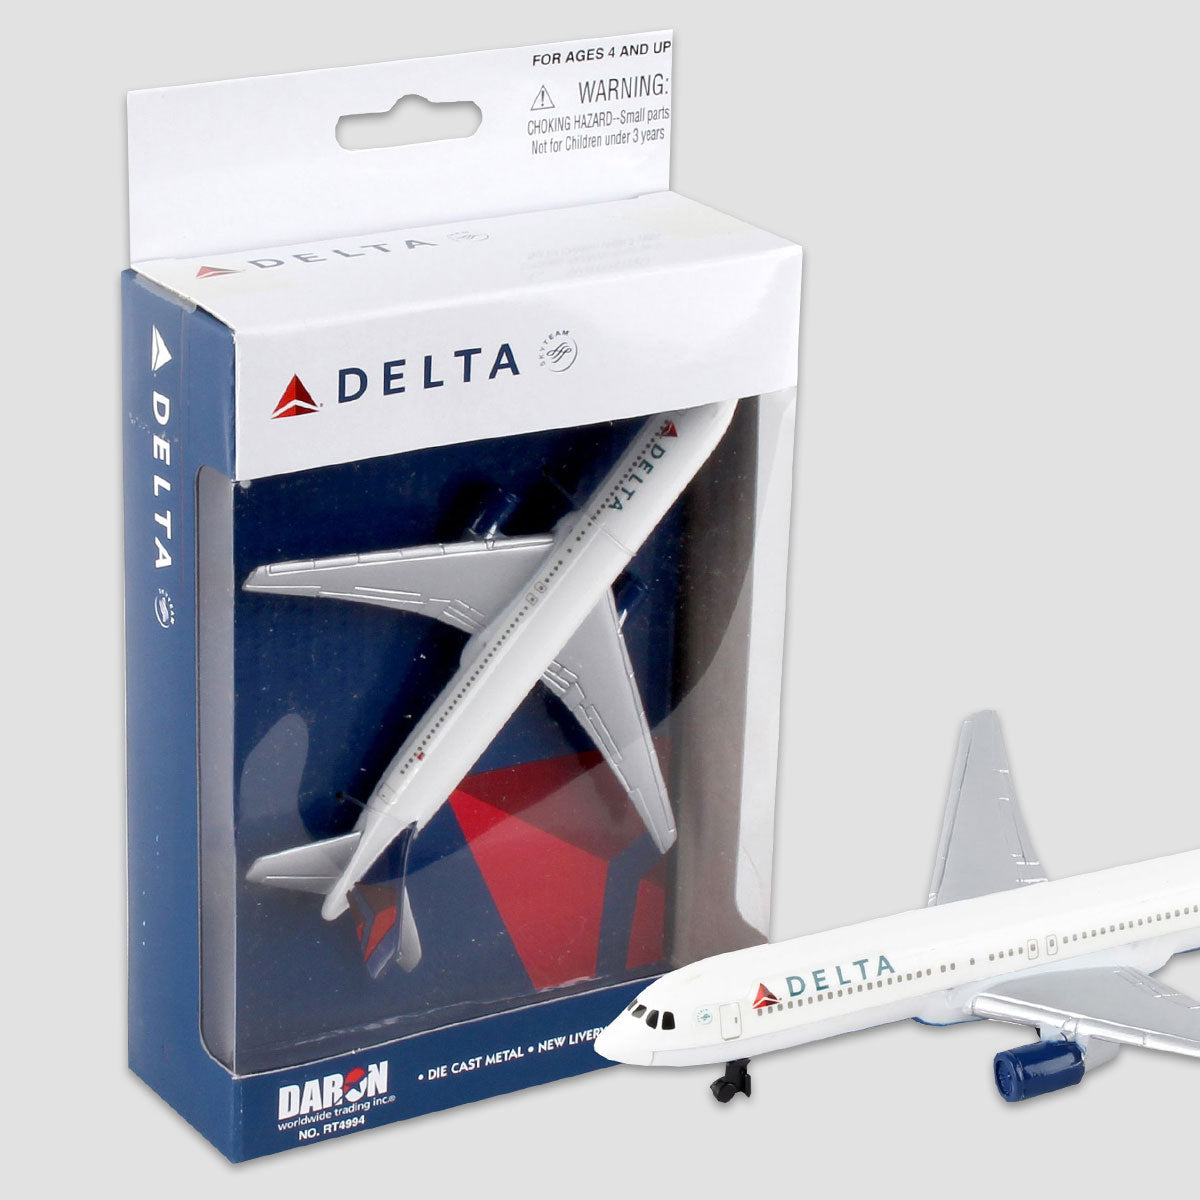 Delta Airlines Single Plane